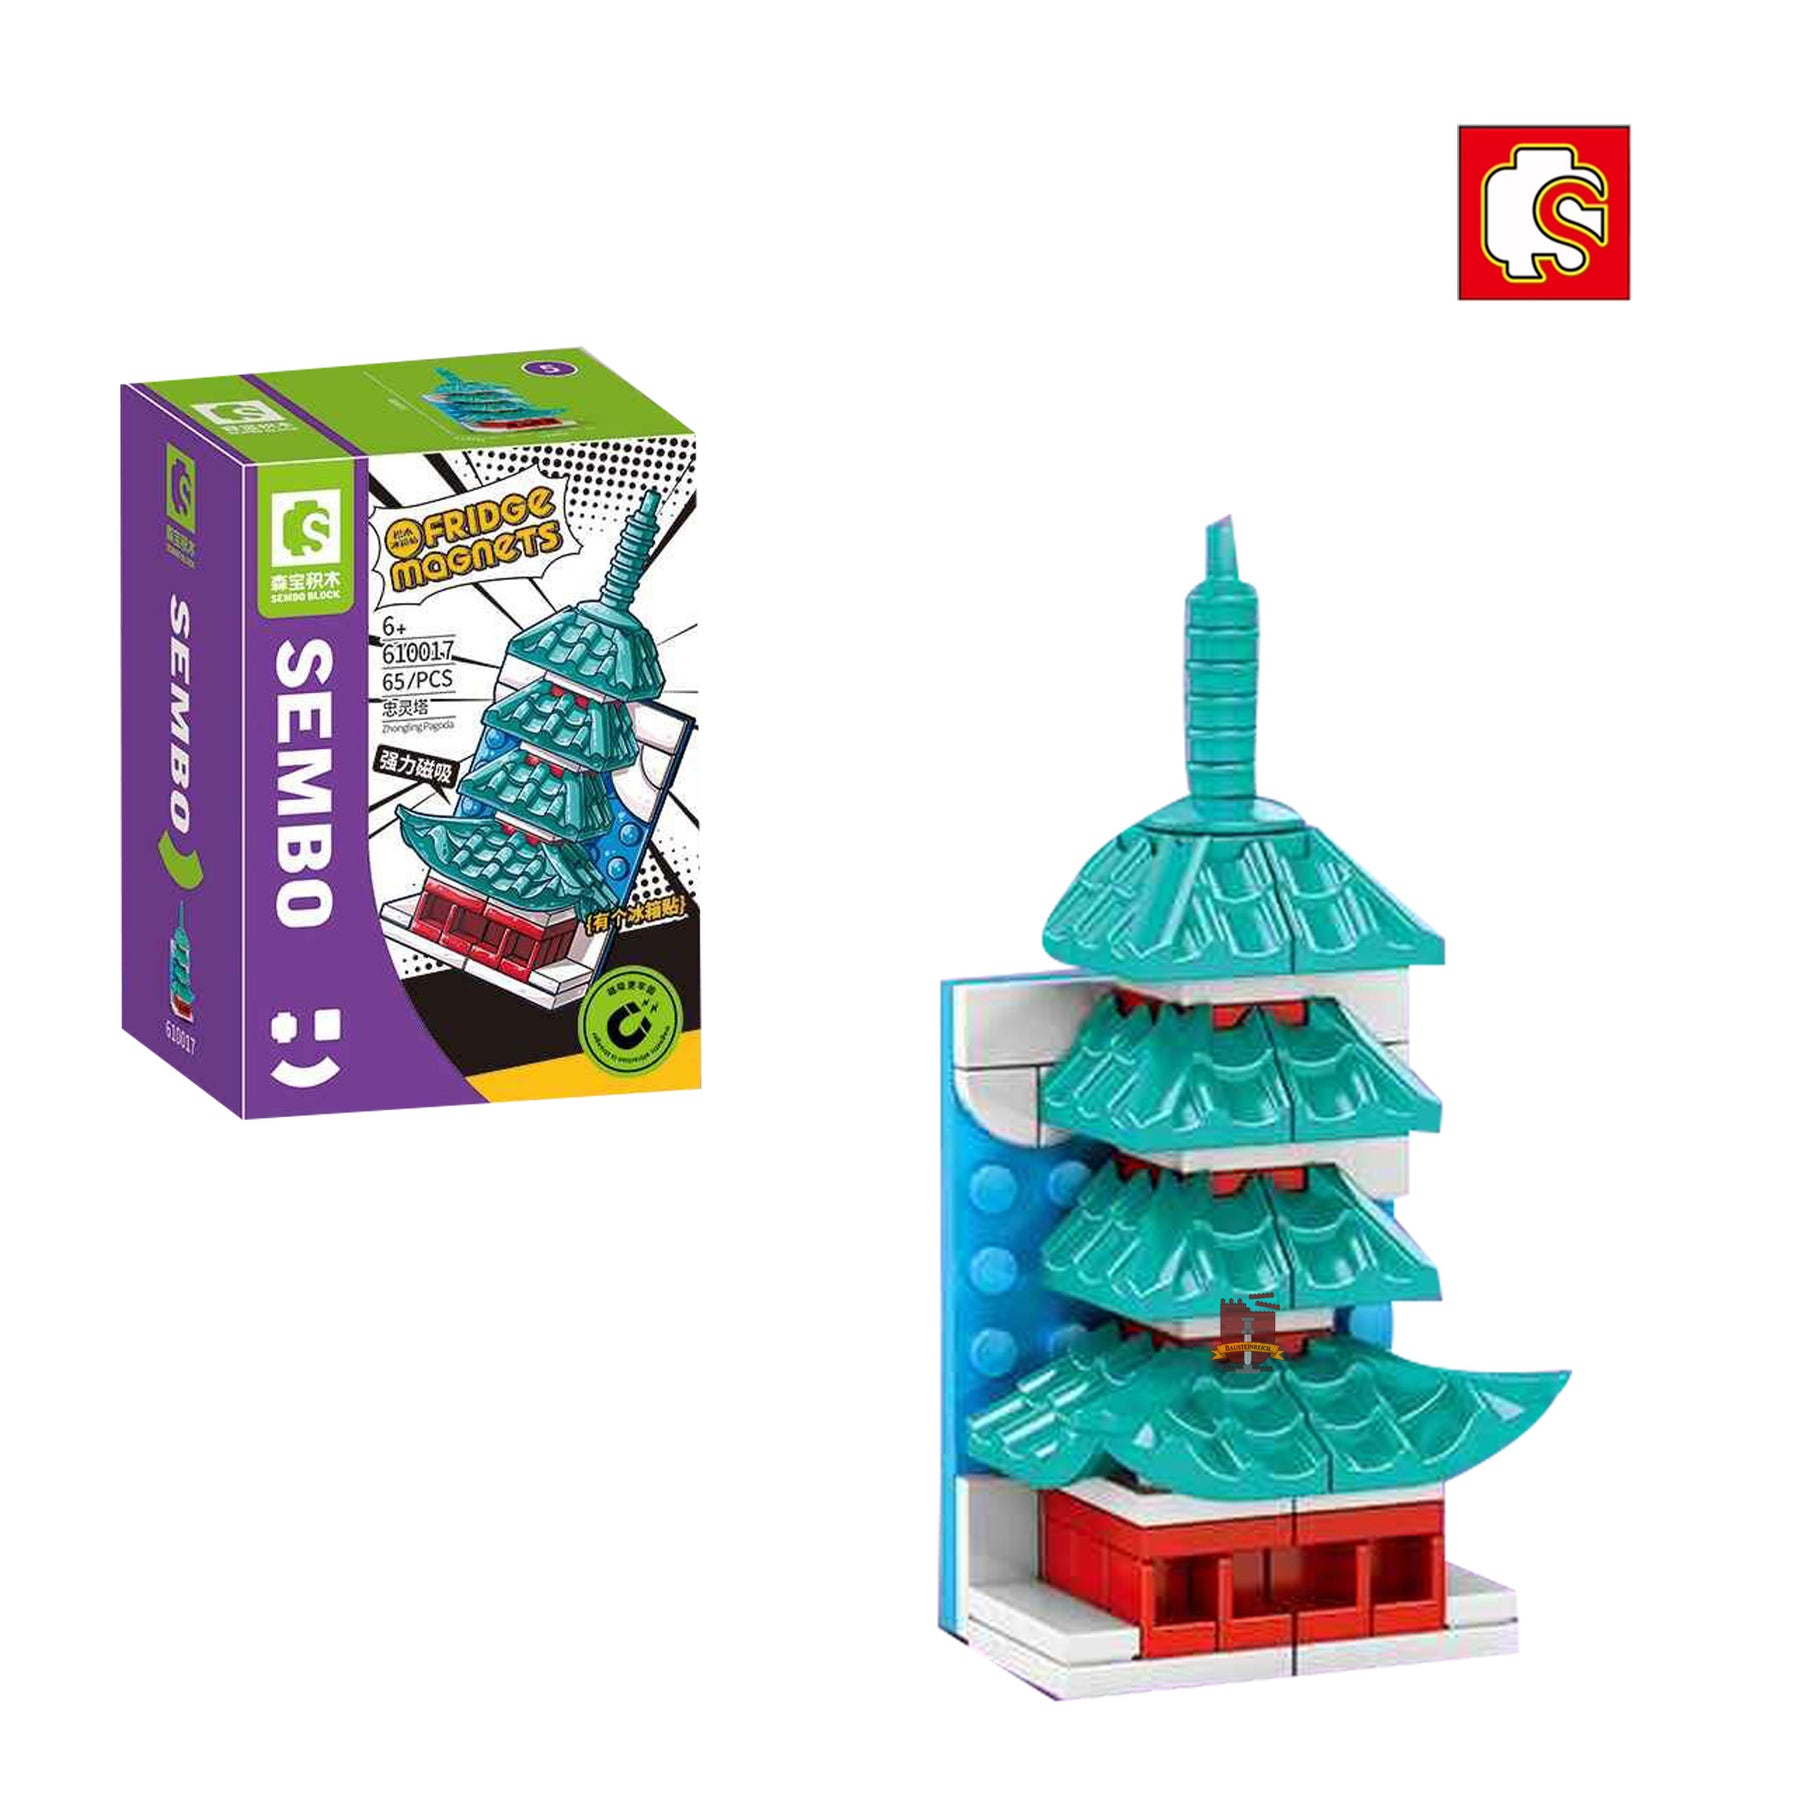 610017 - Kühlschrankmagneten Chinesischer Turm (Sembo)